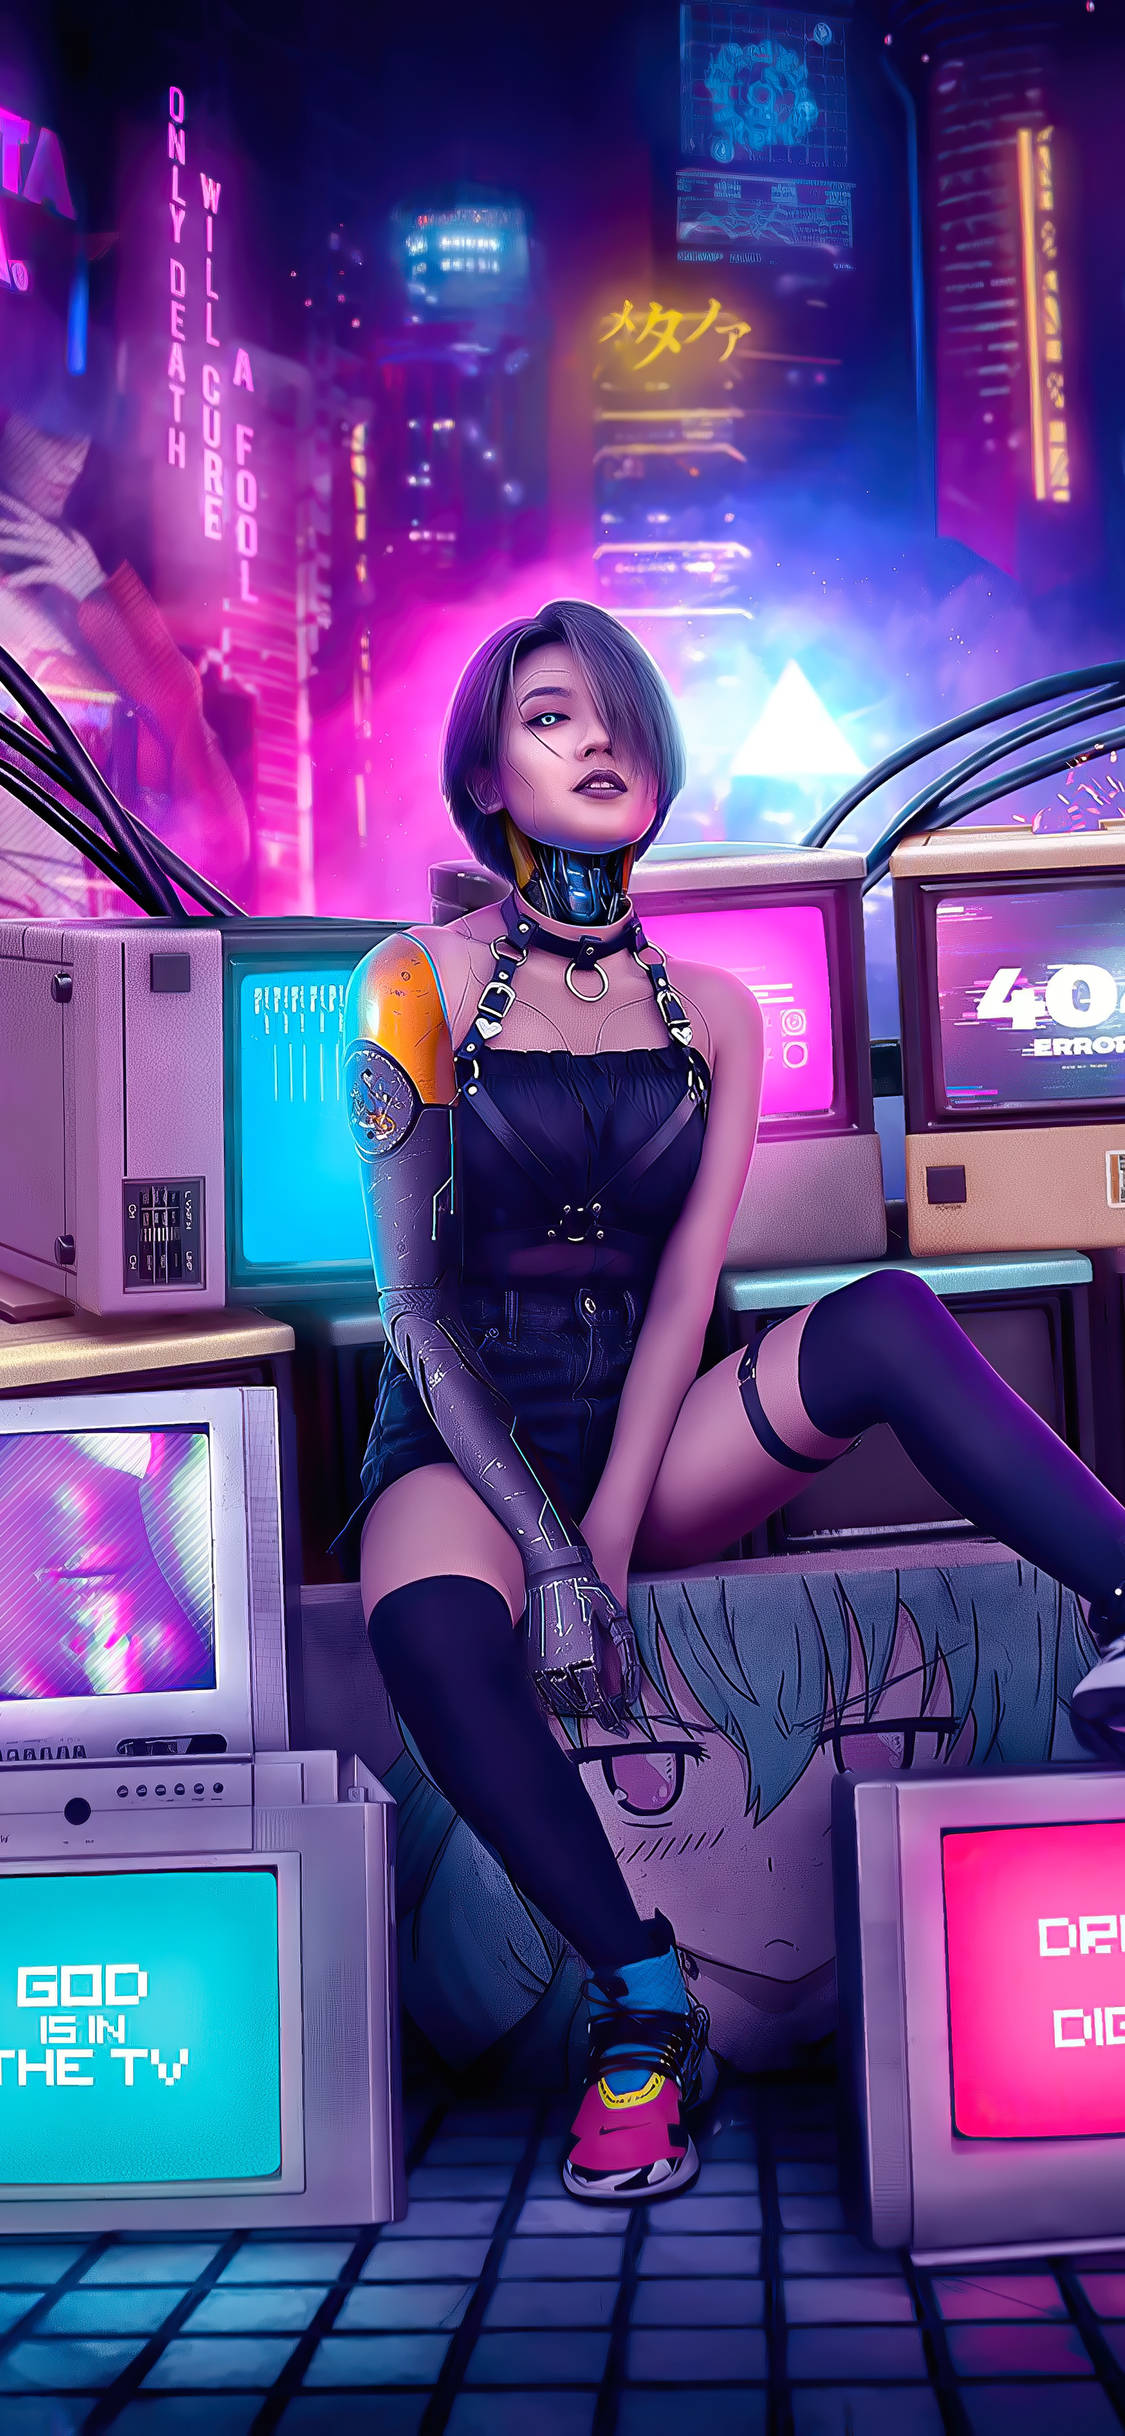 Cyberpunk Female On A Box Iphone Wallpaper